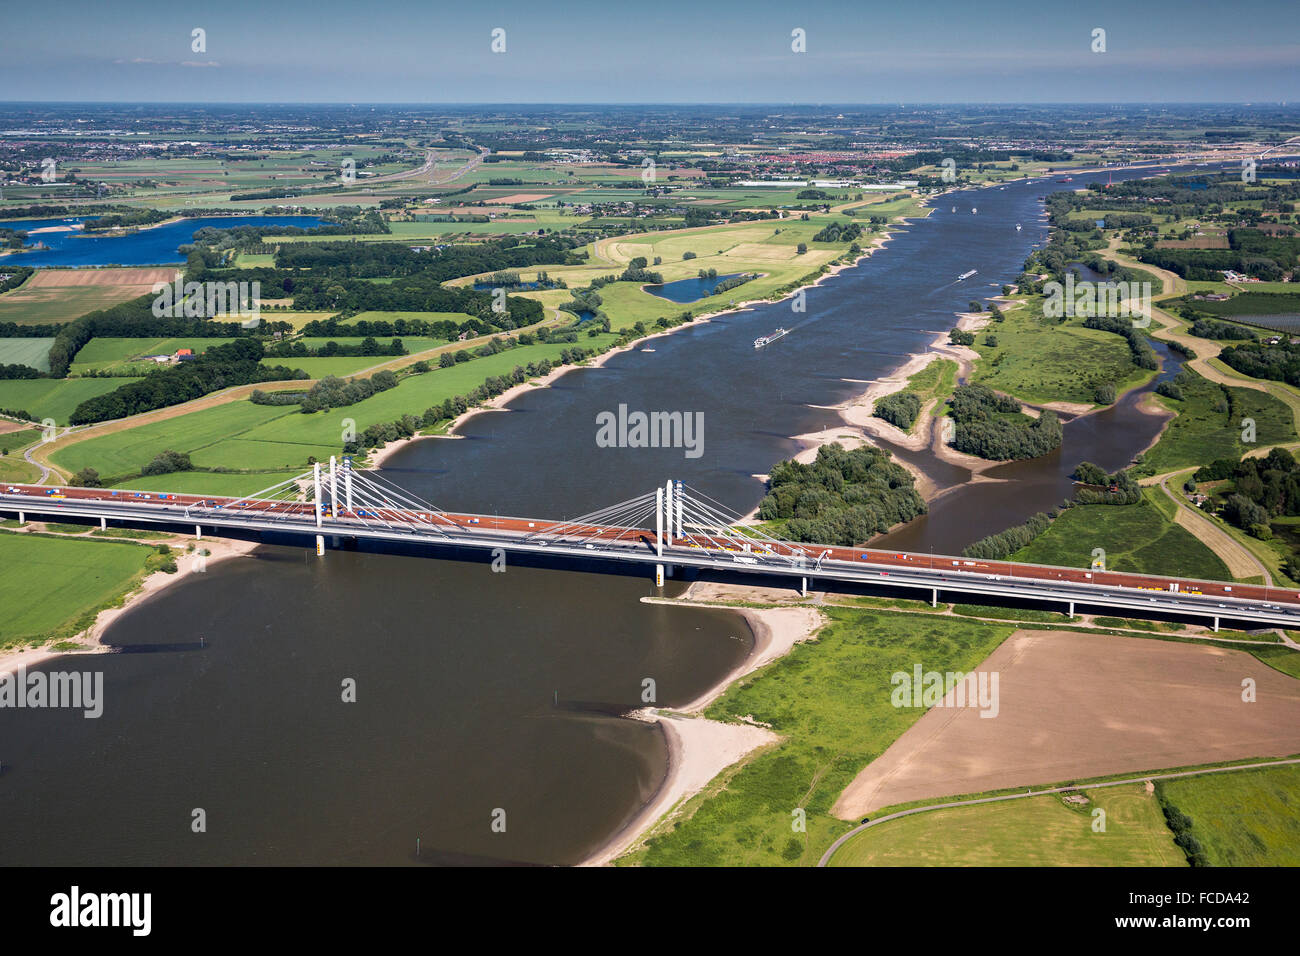 Niederlande, Nijmegen, Fluss Waal. Neue Brücke De Oversteek genannt. Projektraum für den Fluss. Luftbild Stockfoto